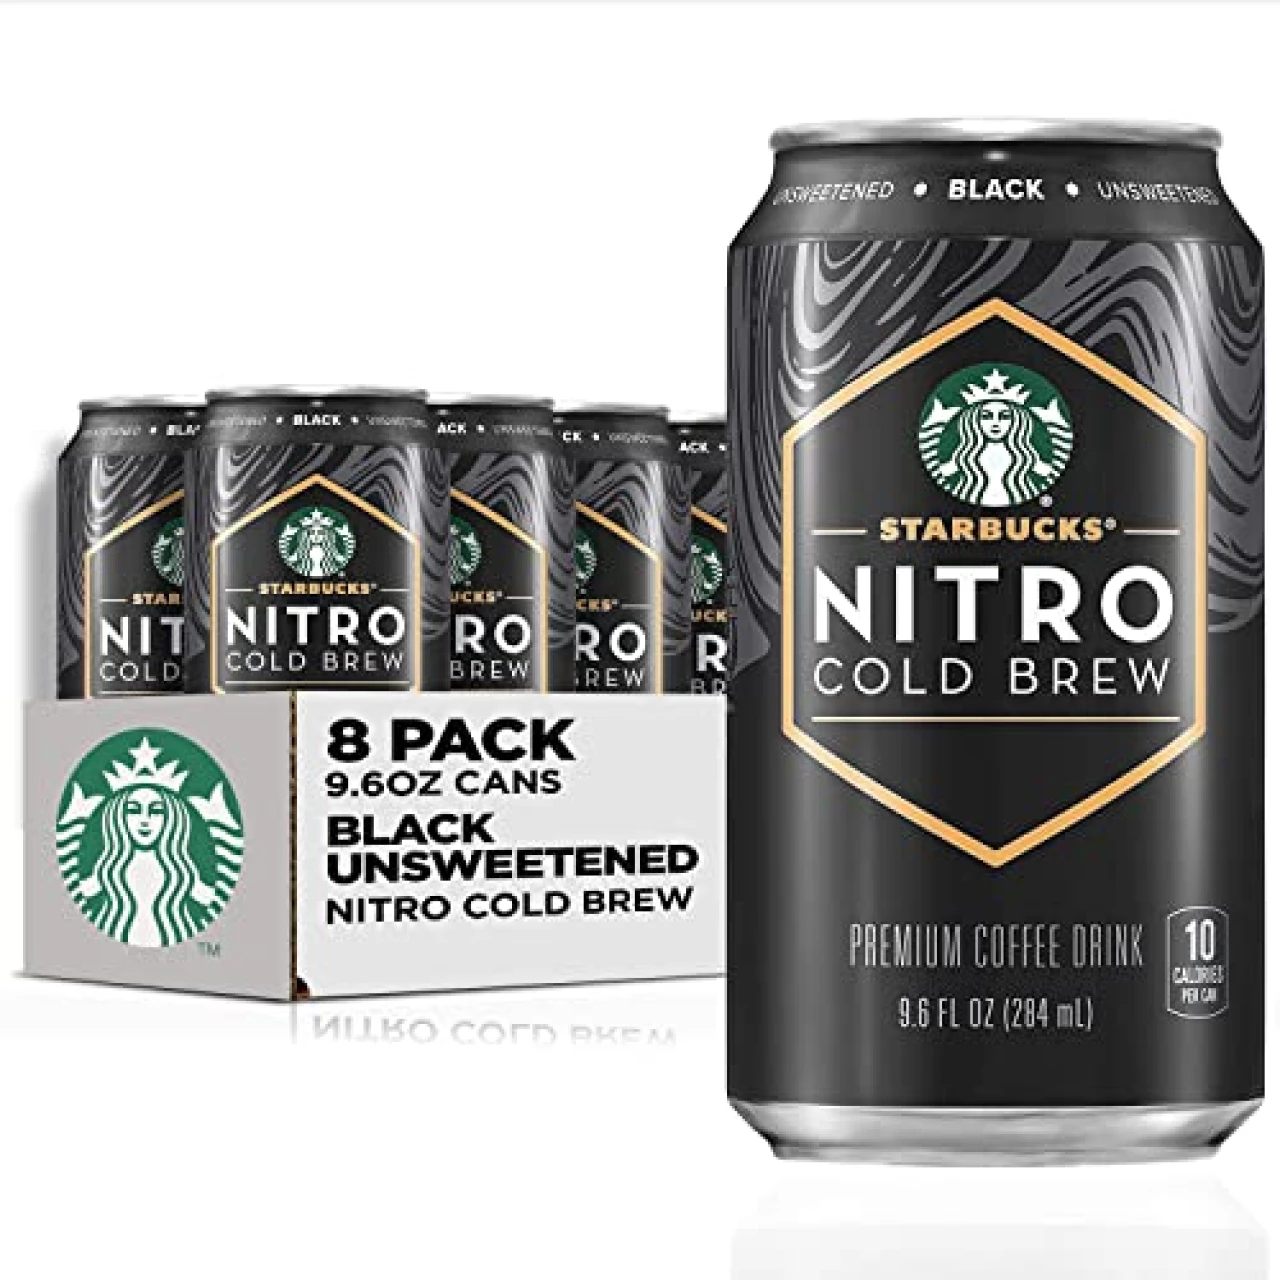 Starbucks Nitro Cold Brew Liquid, Dark Roast, Black Unsweetened, 9.6 fl oz Can (8 Pack) (Packaging May Vary)